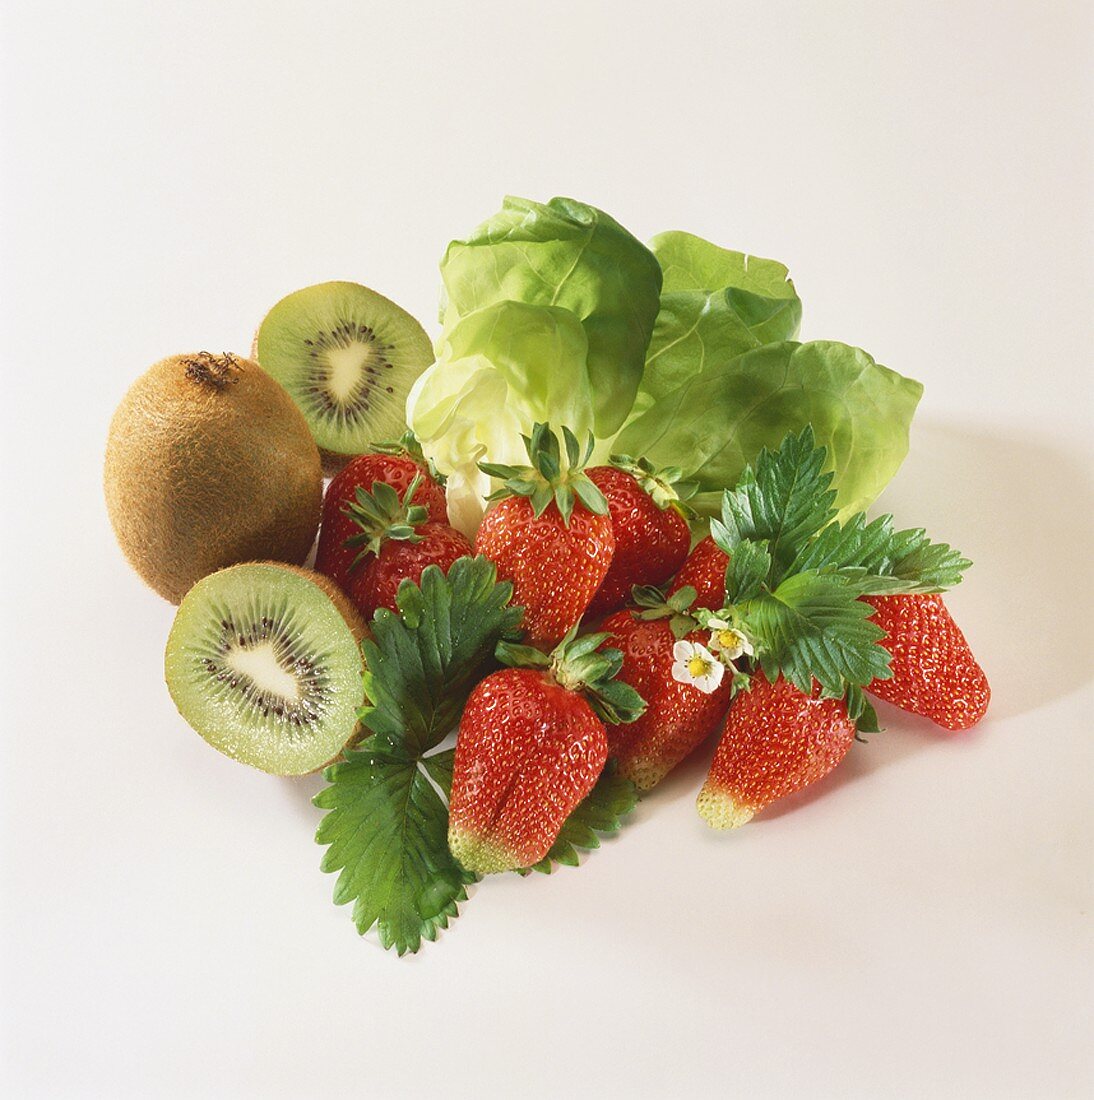 Fresh strawberries, kiwi fruits and lettuce leaves